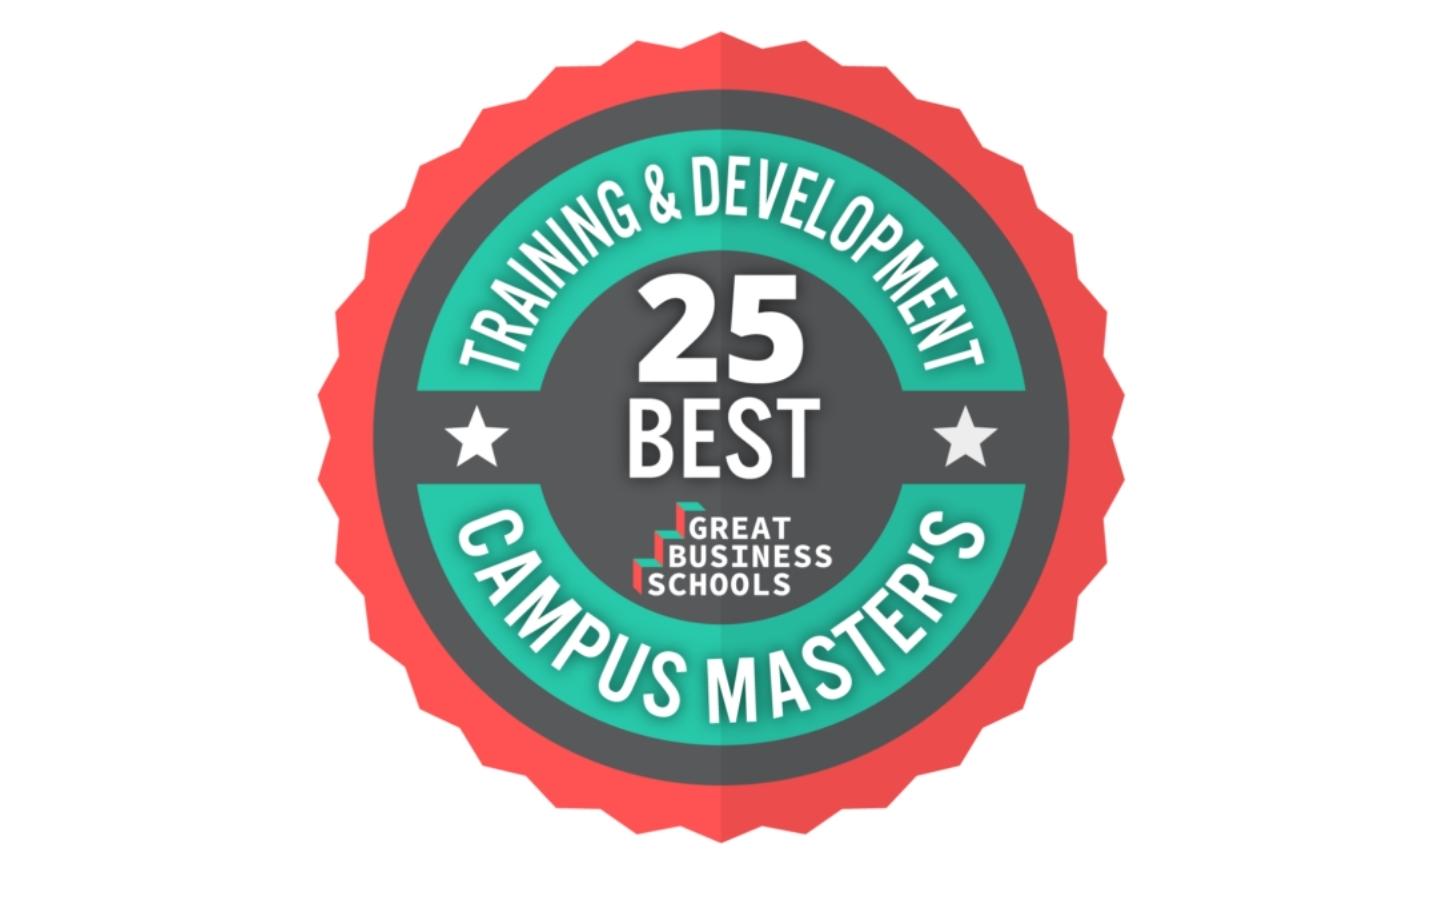 Great Business Schools Top Training and Development Program Badge